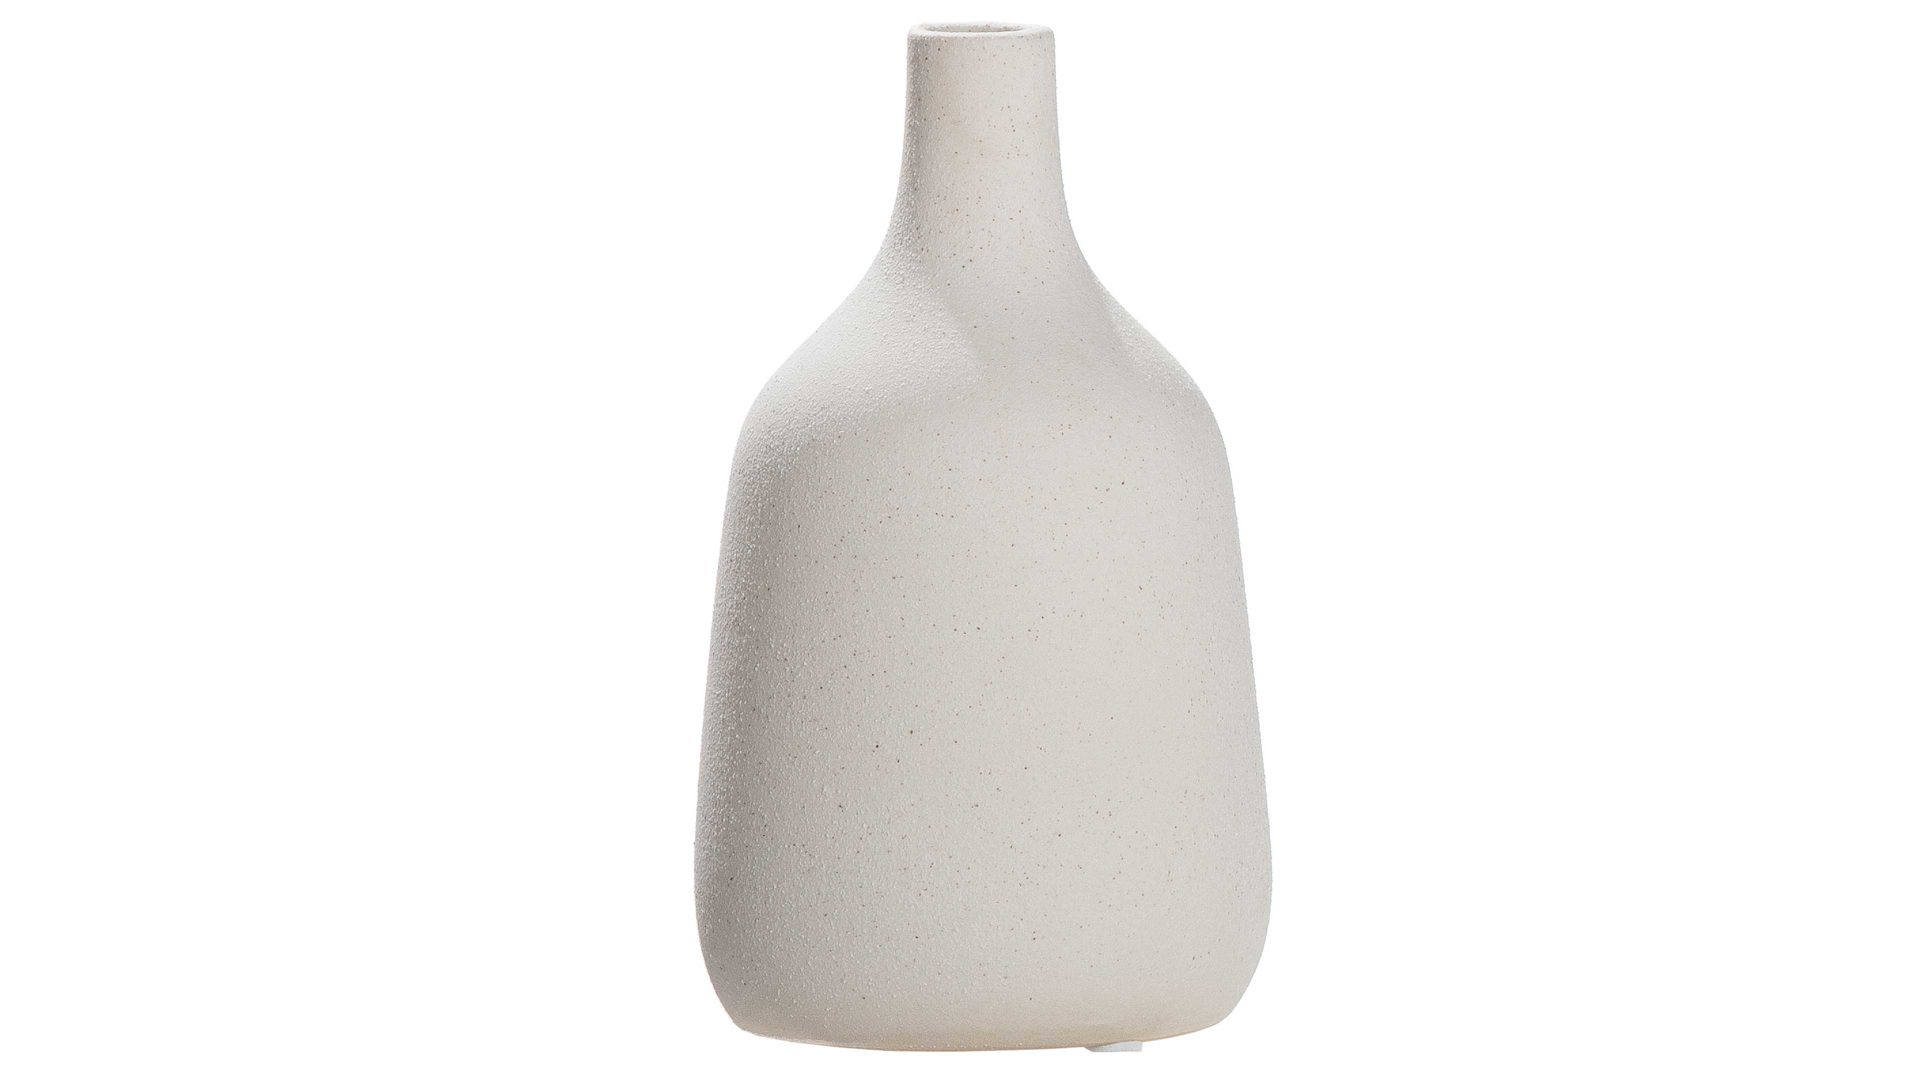 Vase Interliving BEST BUDDYS! aus Keramik in Weiß Interliving BEST BUDDYS! Vase Grezzo cremeweiße Keramik - Höhe ca. 21 cm